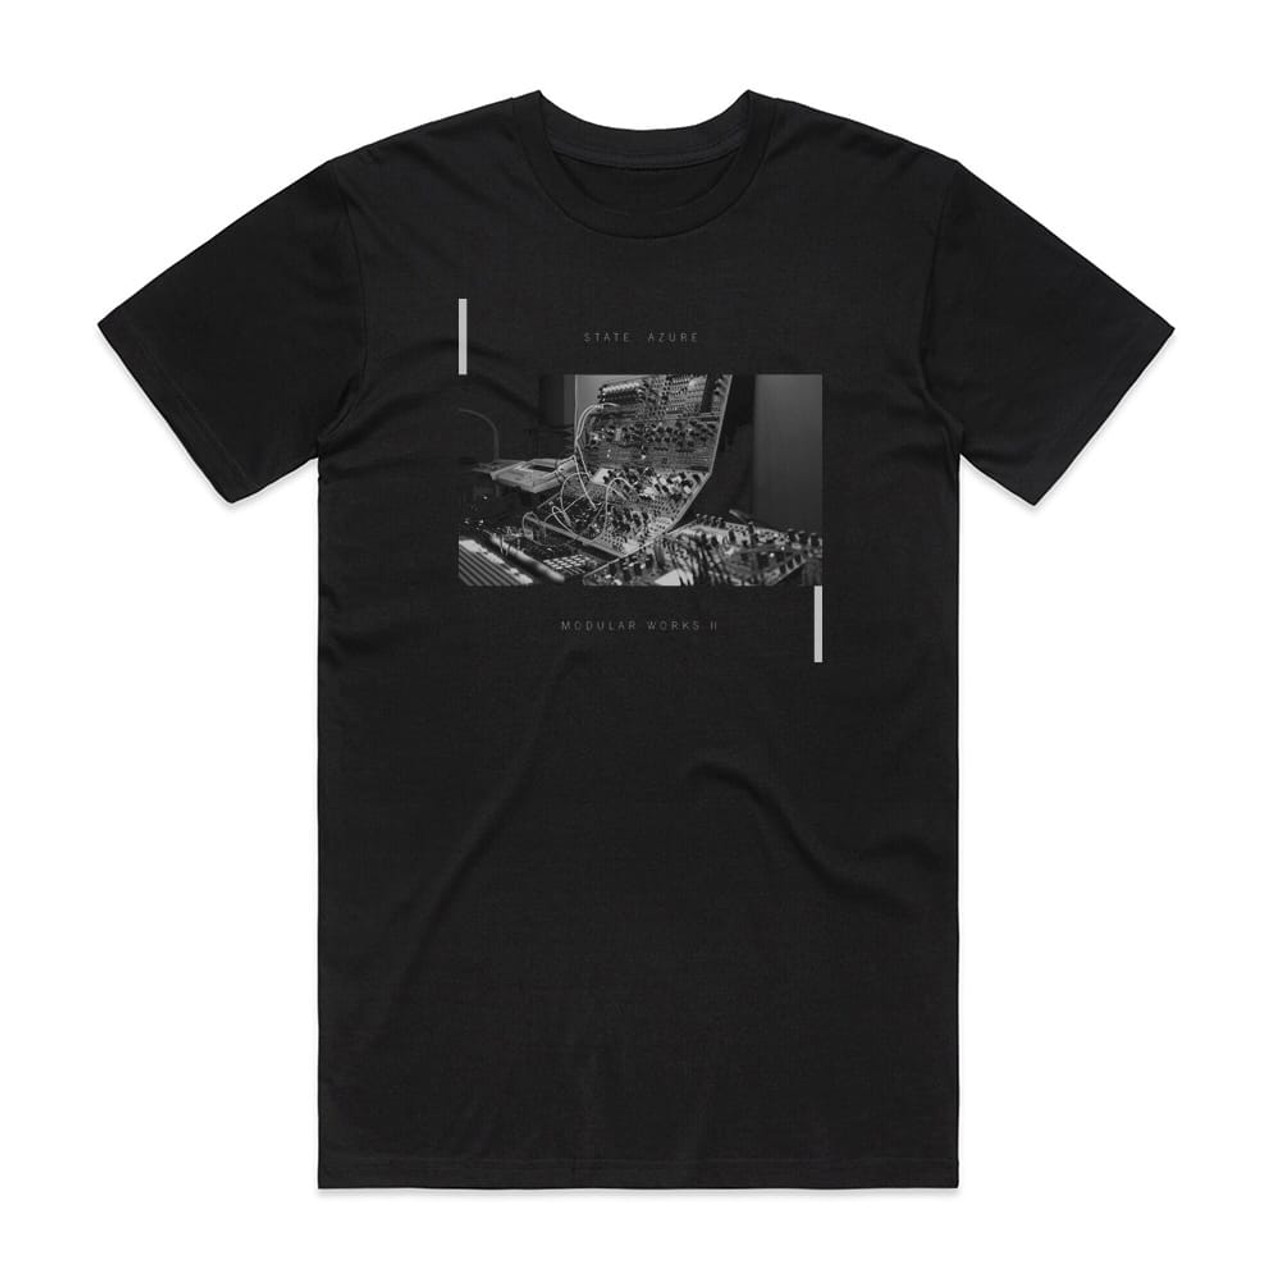 State Azure Modular Works Ii Album Cover T-Shirt Black